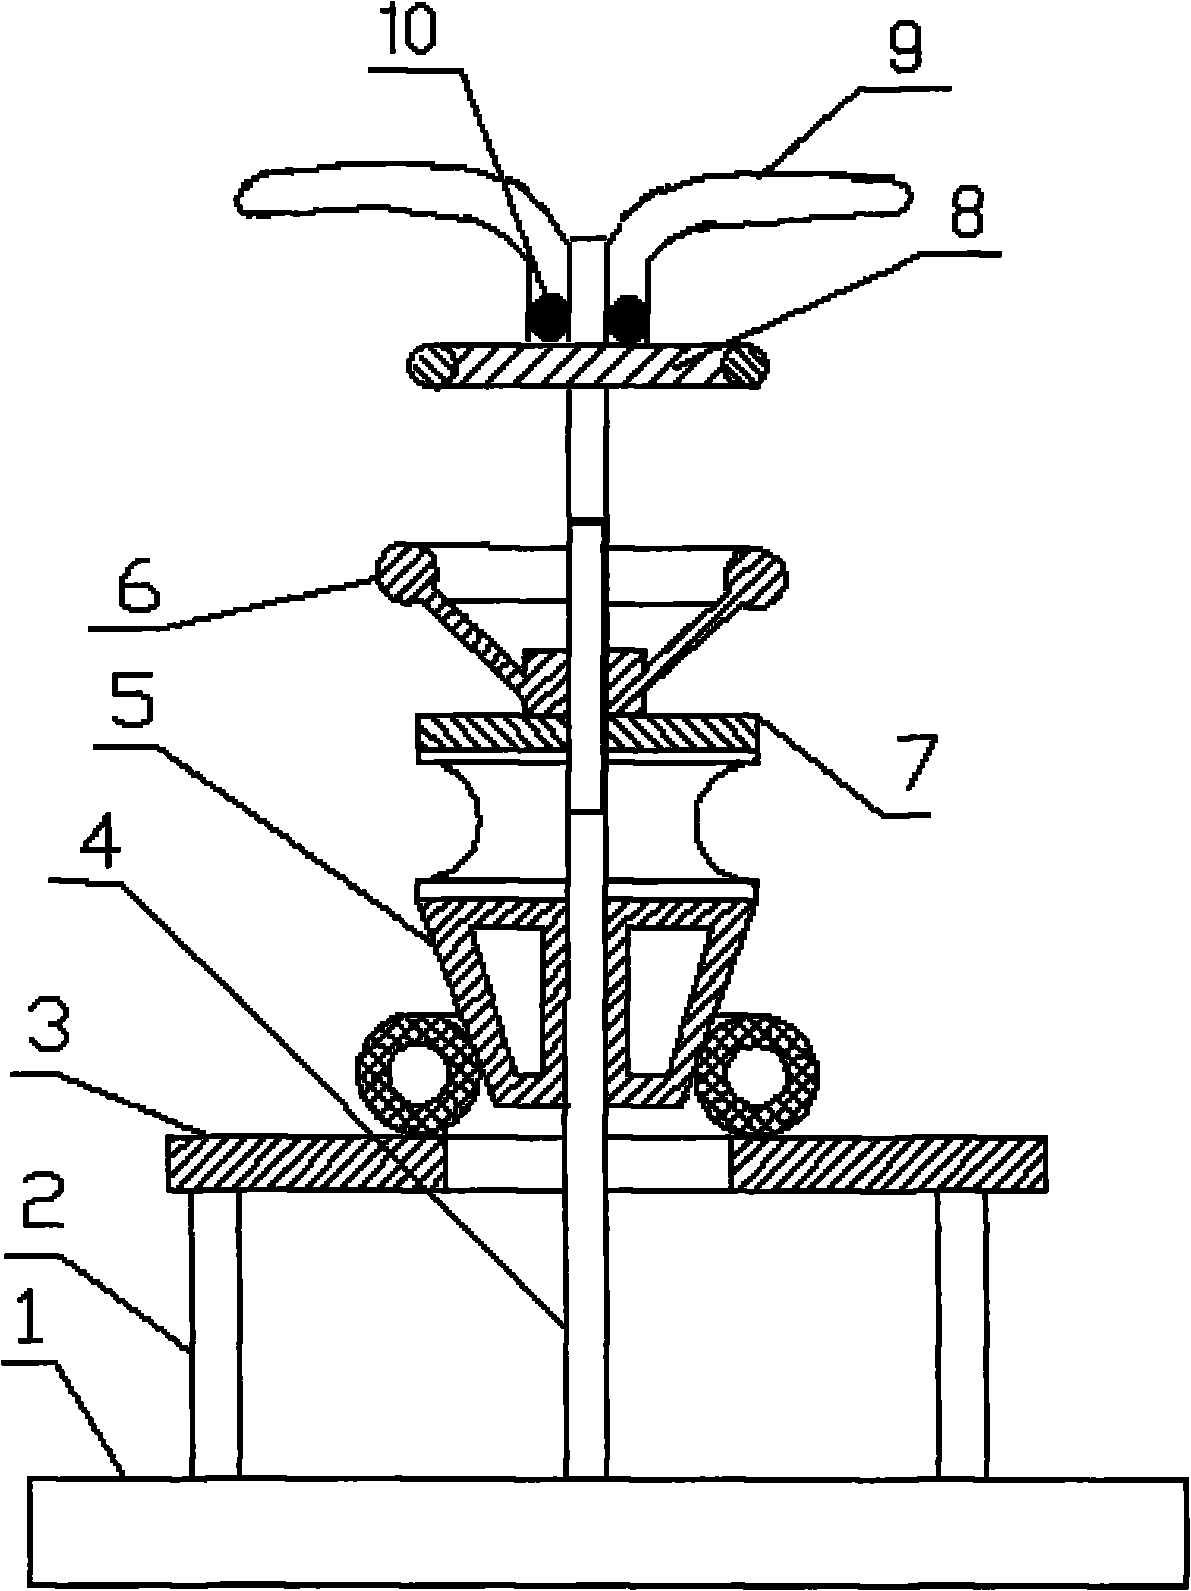 Novel hub and tyre assembling mechanism